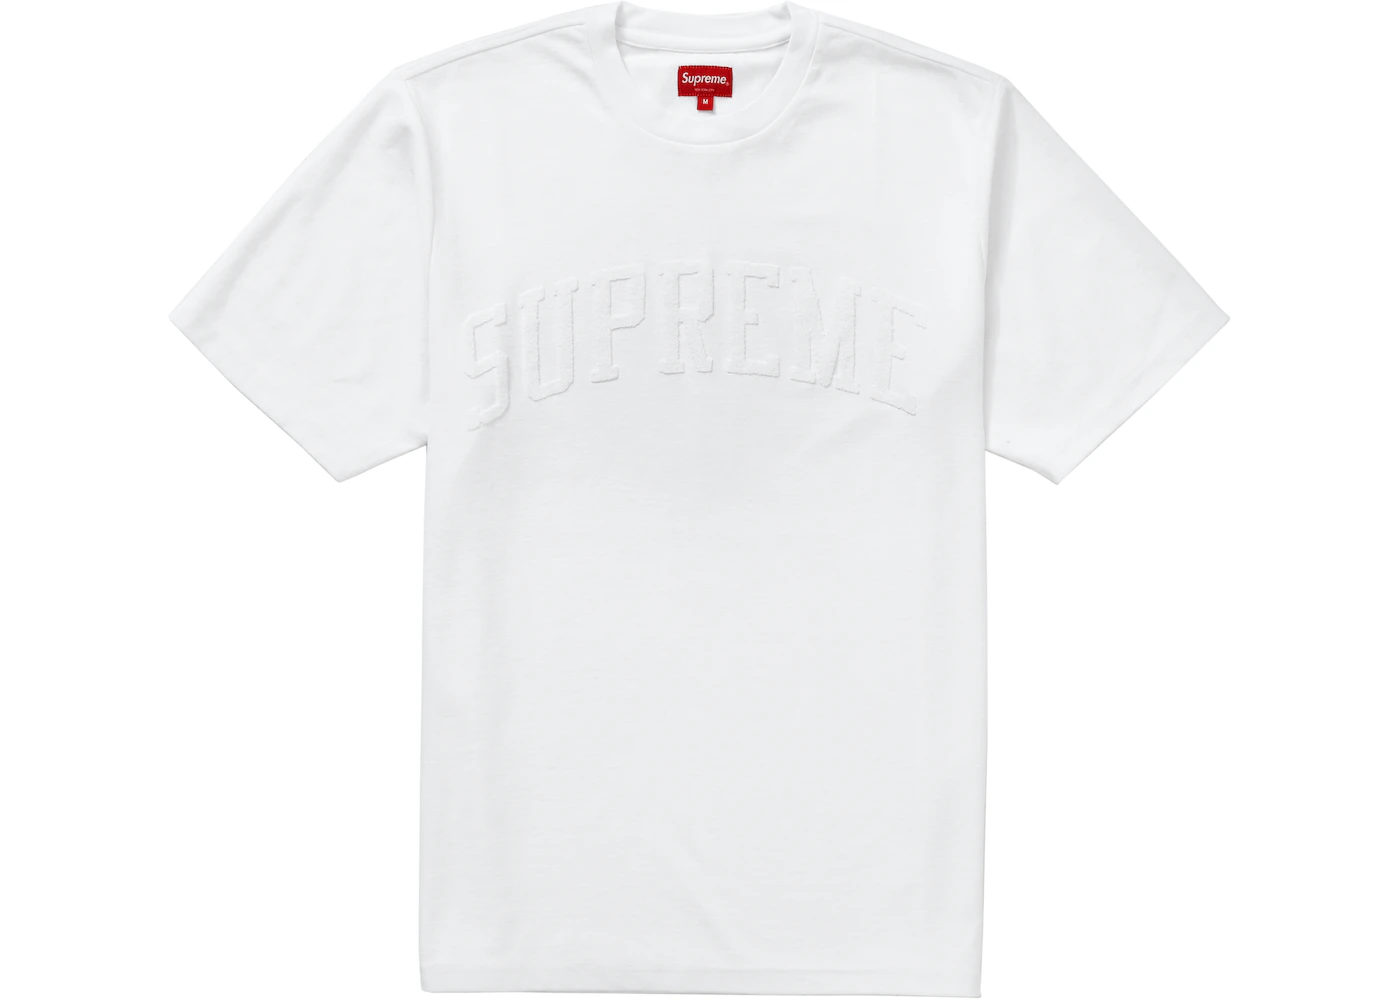 Supreme Chenille Arc Logo S/S Top White Men's - FW19 - US